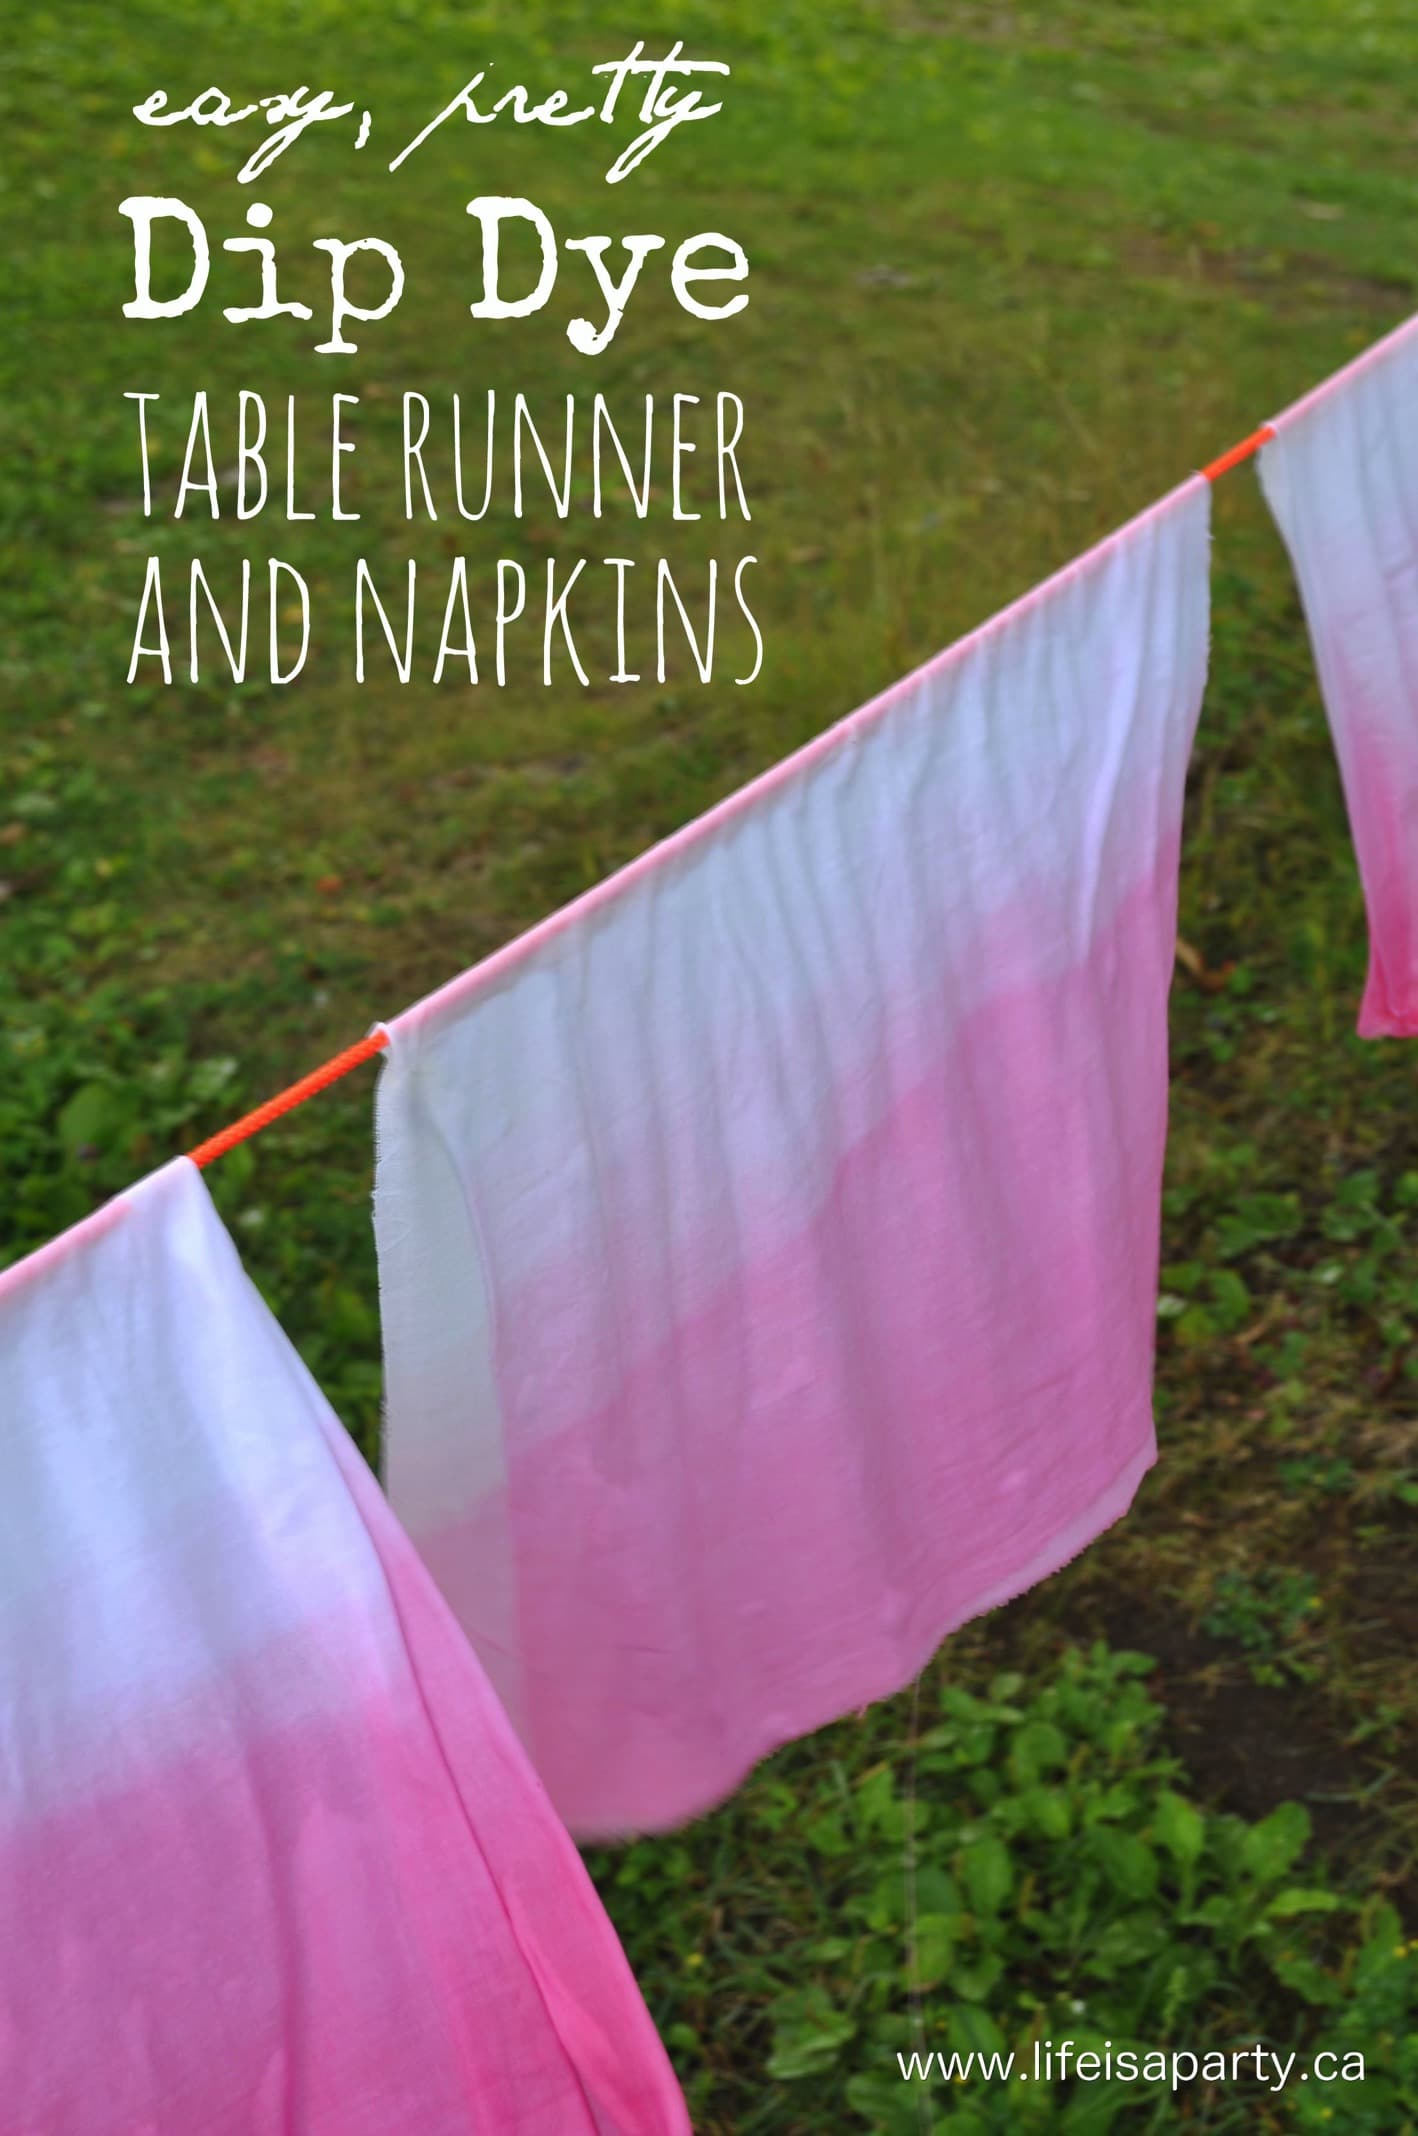 Dip Dye Table Runner and Napkins